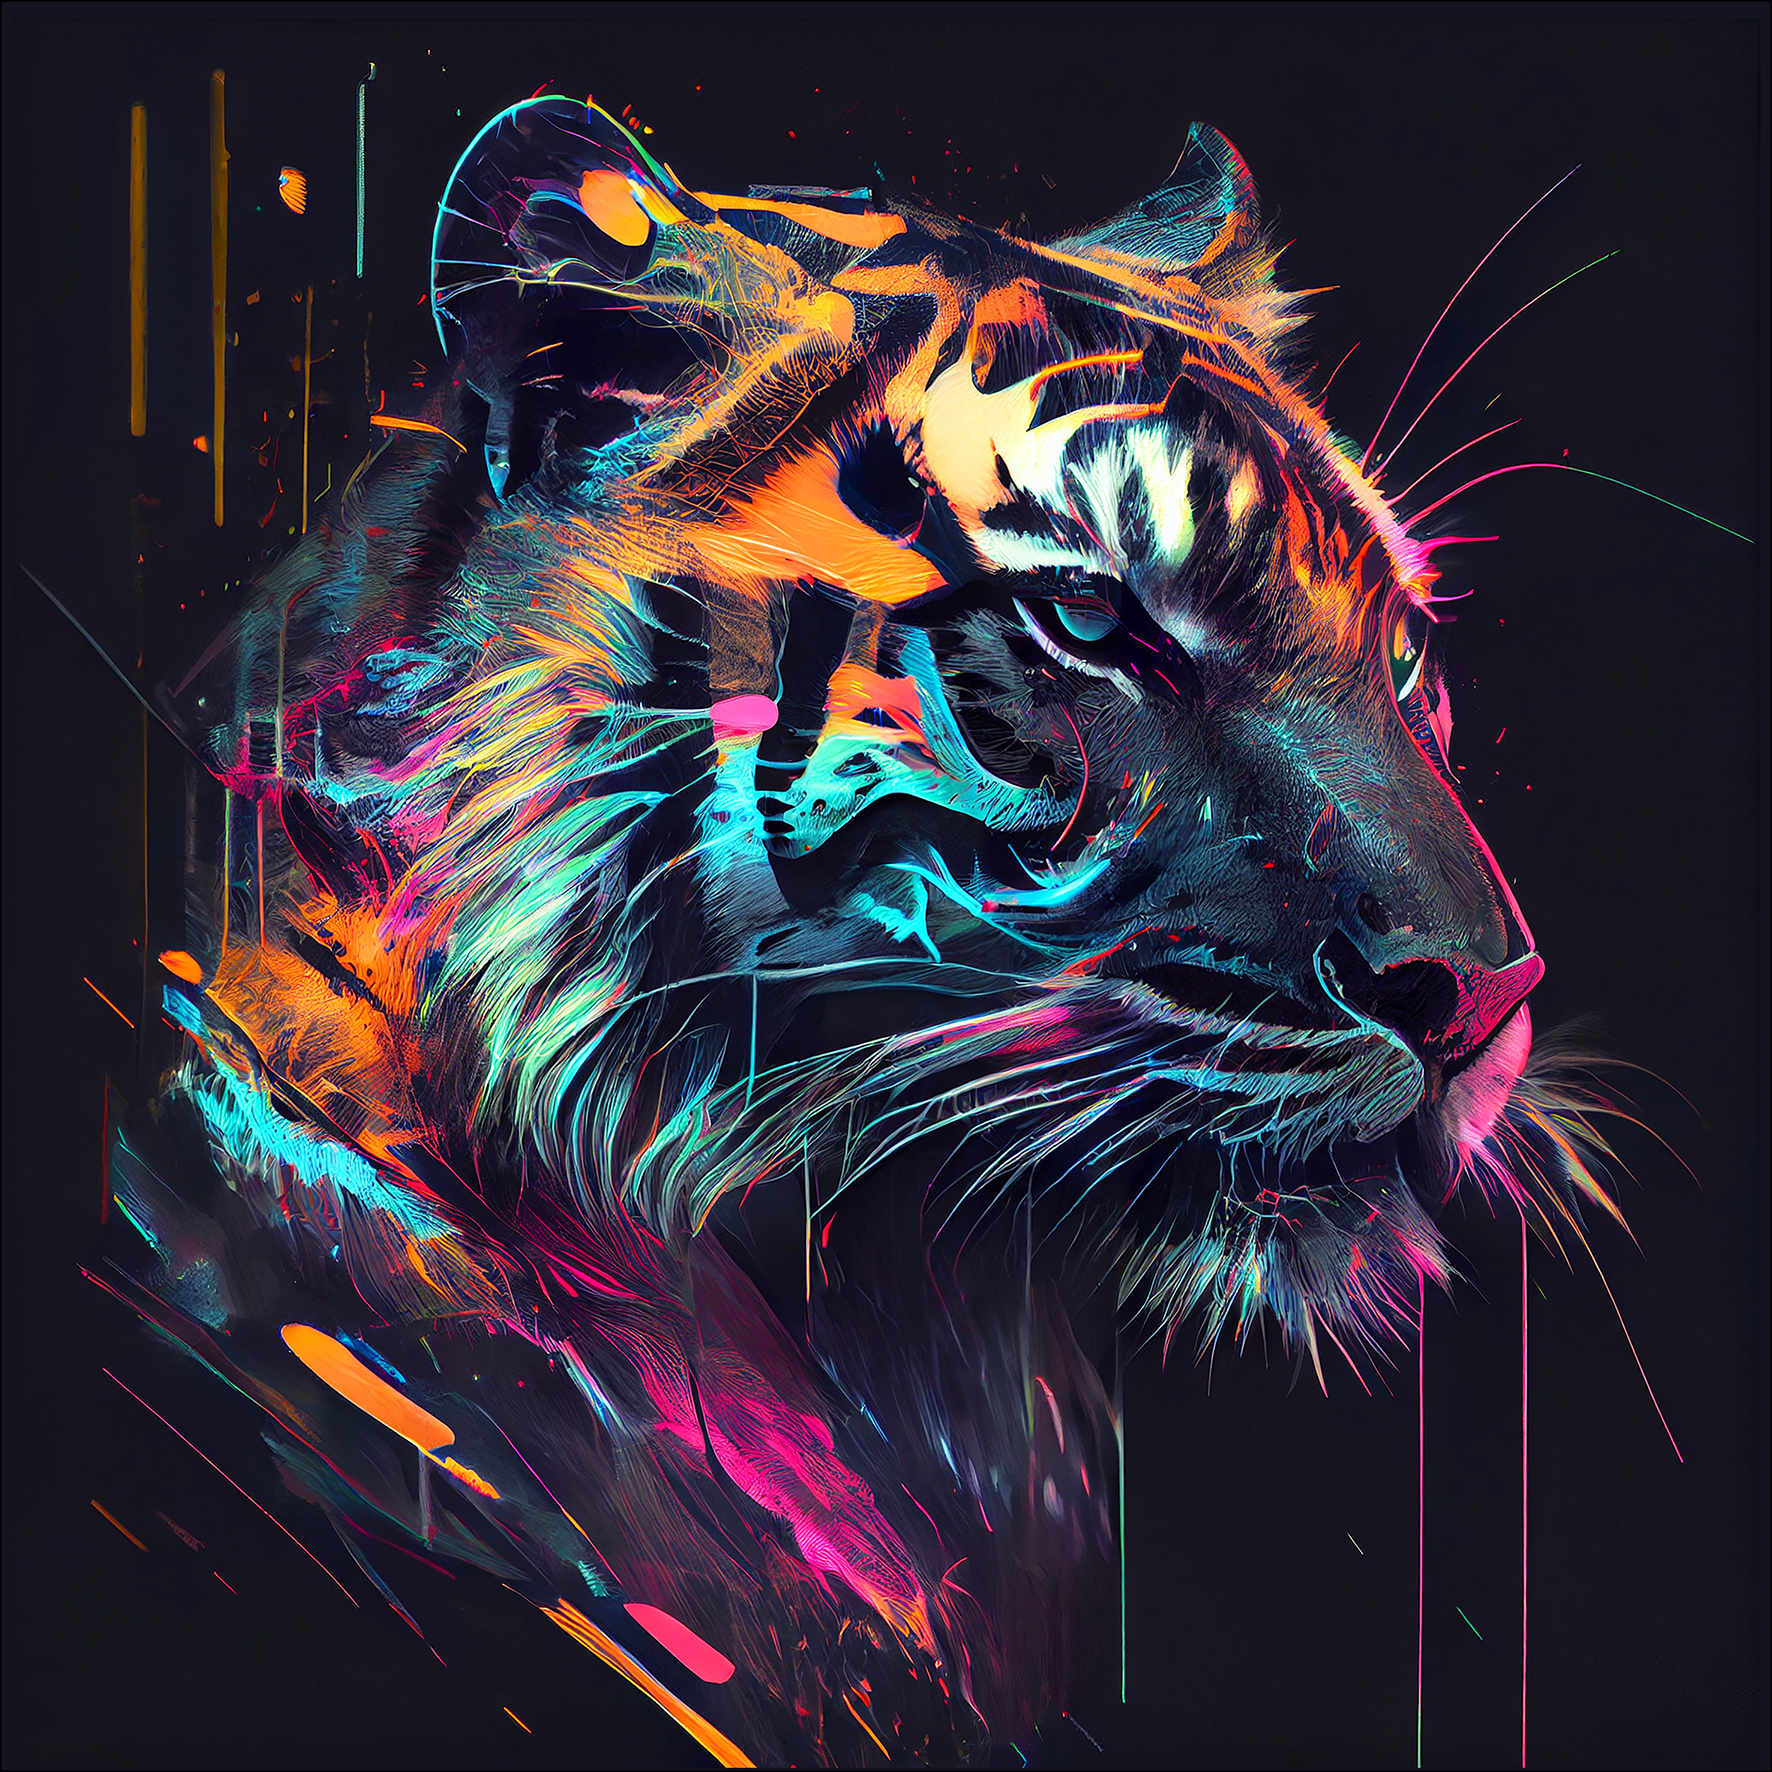 Alu-Art Classic, Colorful Tiger Head II